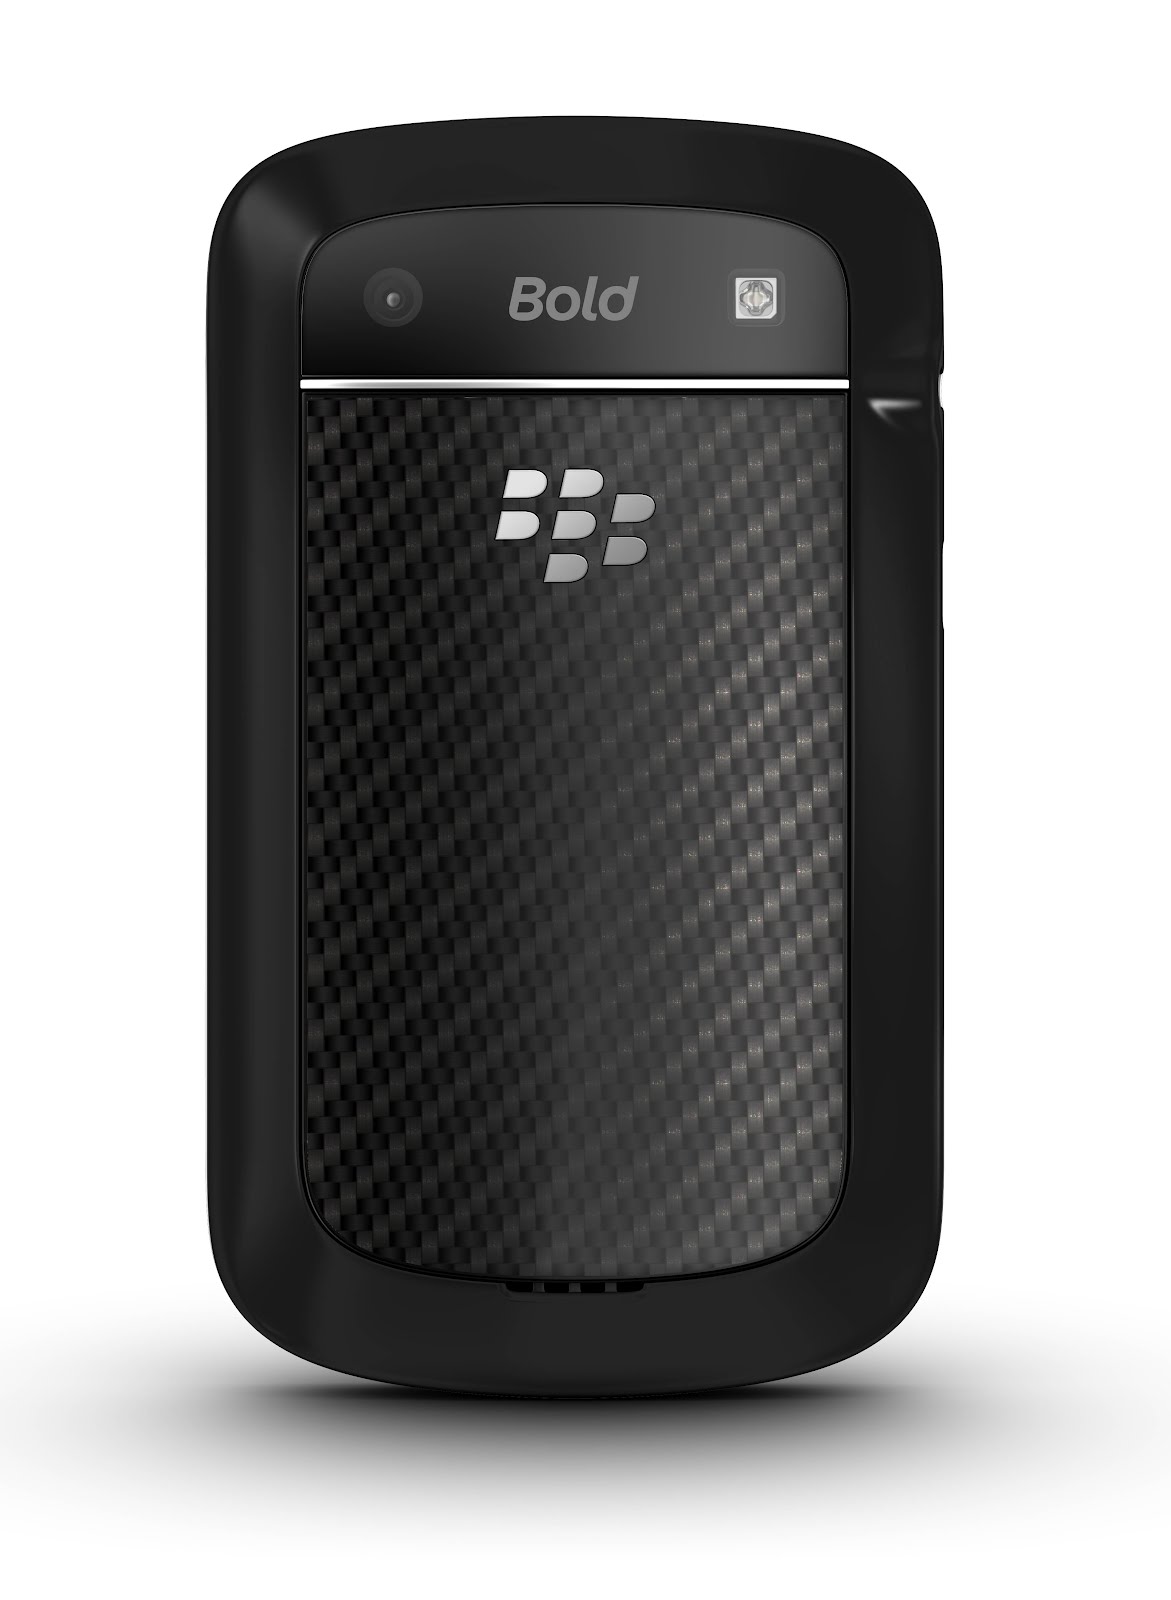 Harga Hp Gambar Foto Blackberry Bold 9900 Dakota Super Jernih Terbaru Harga Blackberry